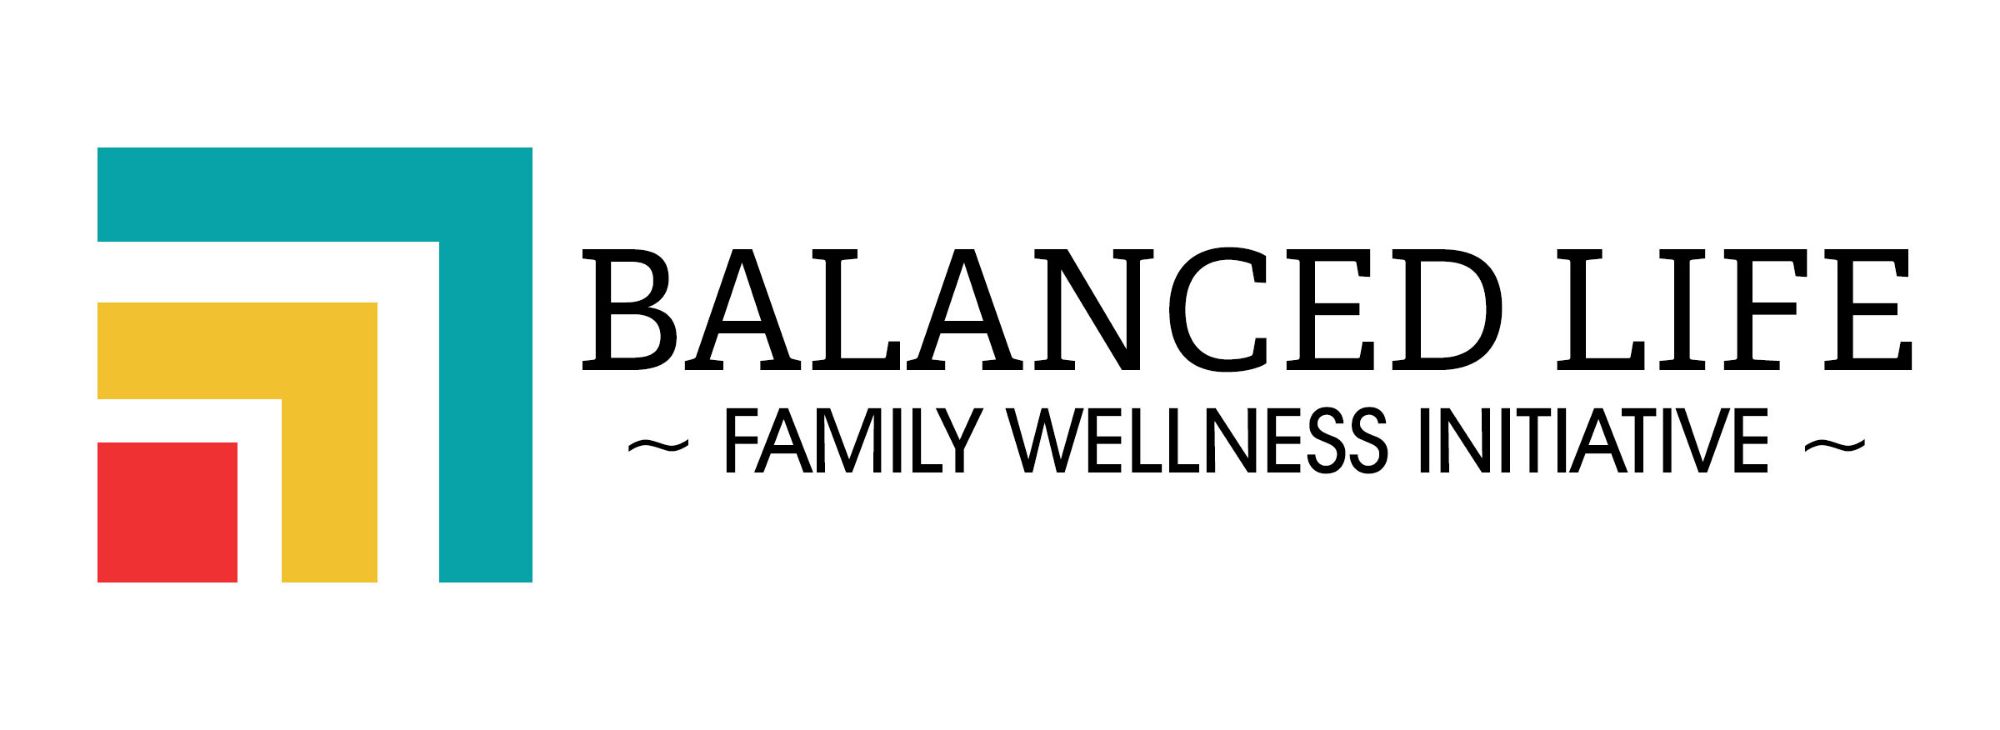 Balanced Life Family Wellness Initiative